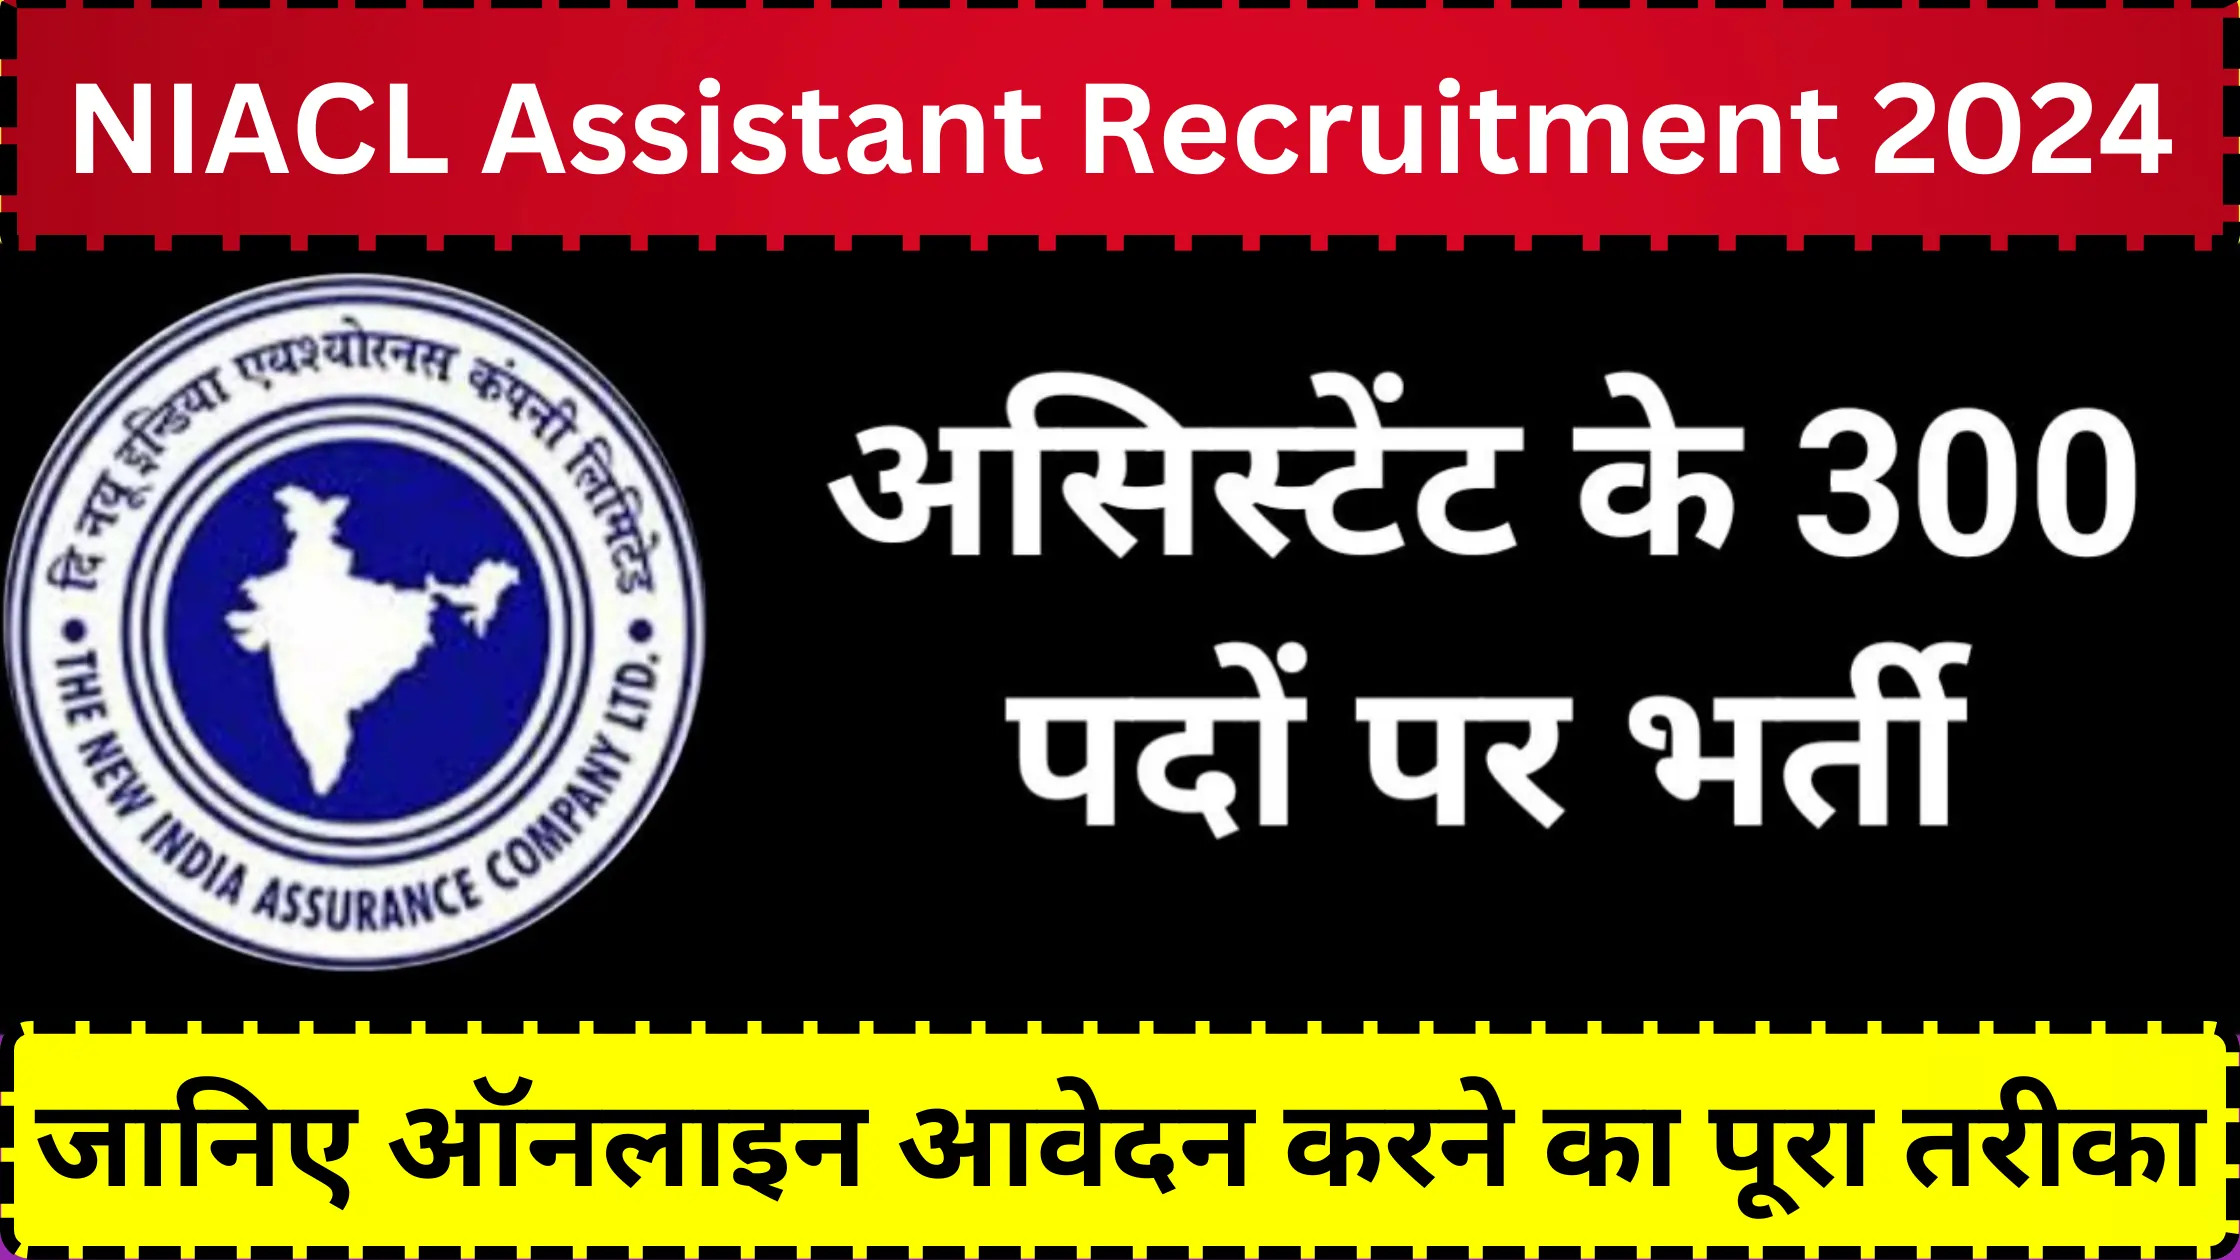 New India Assurance Company Limited